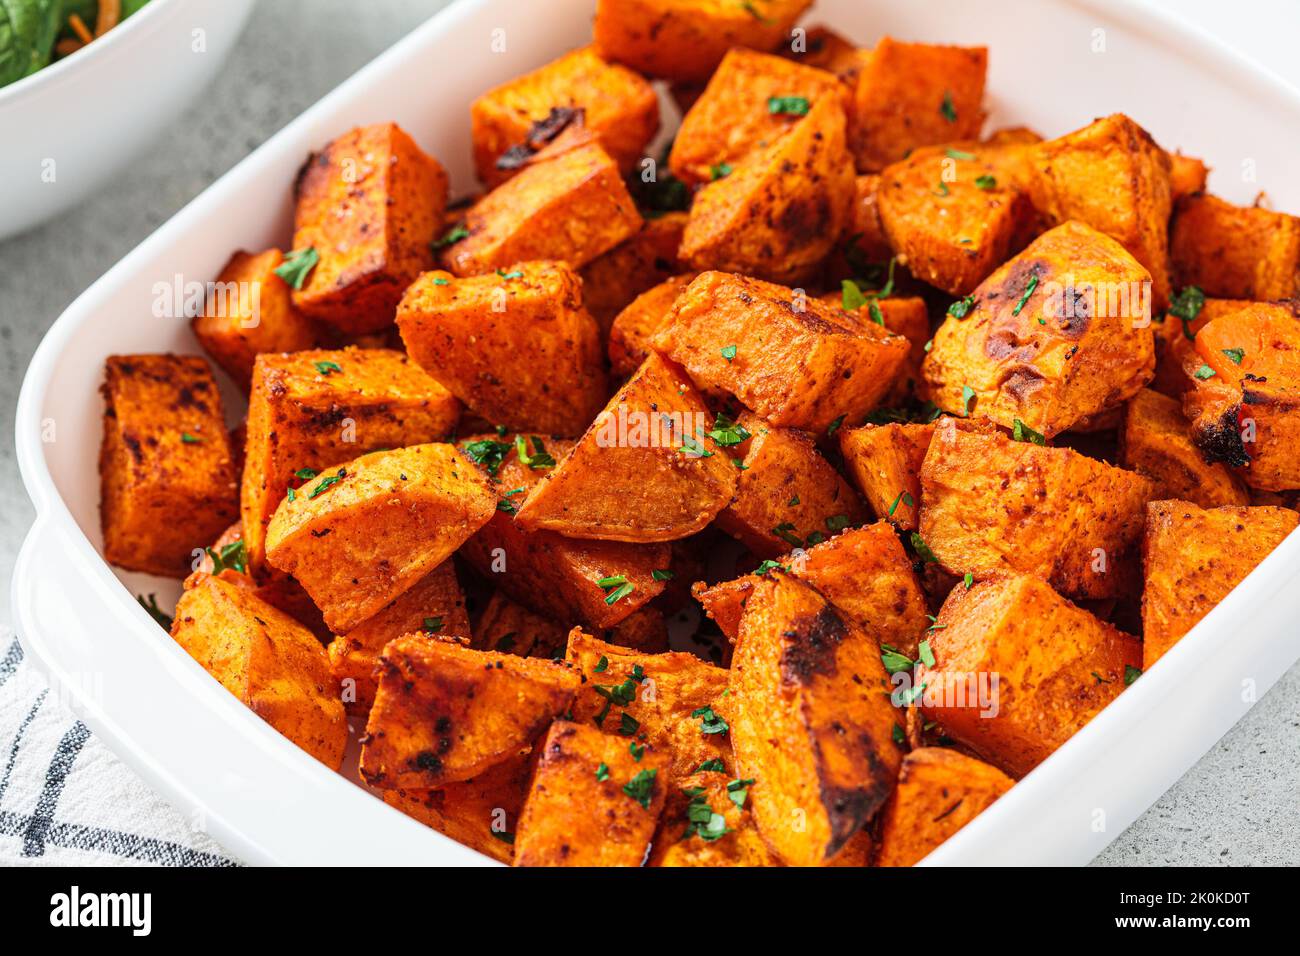 Crispy slices of baked sweet potato. Vegan food concept. Stock Photo